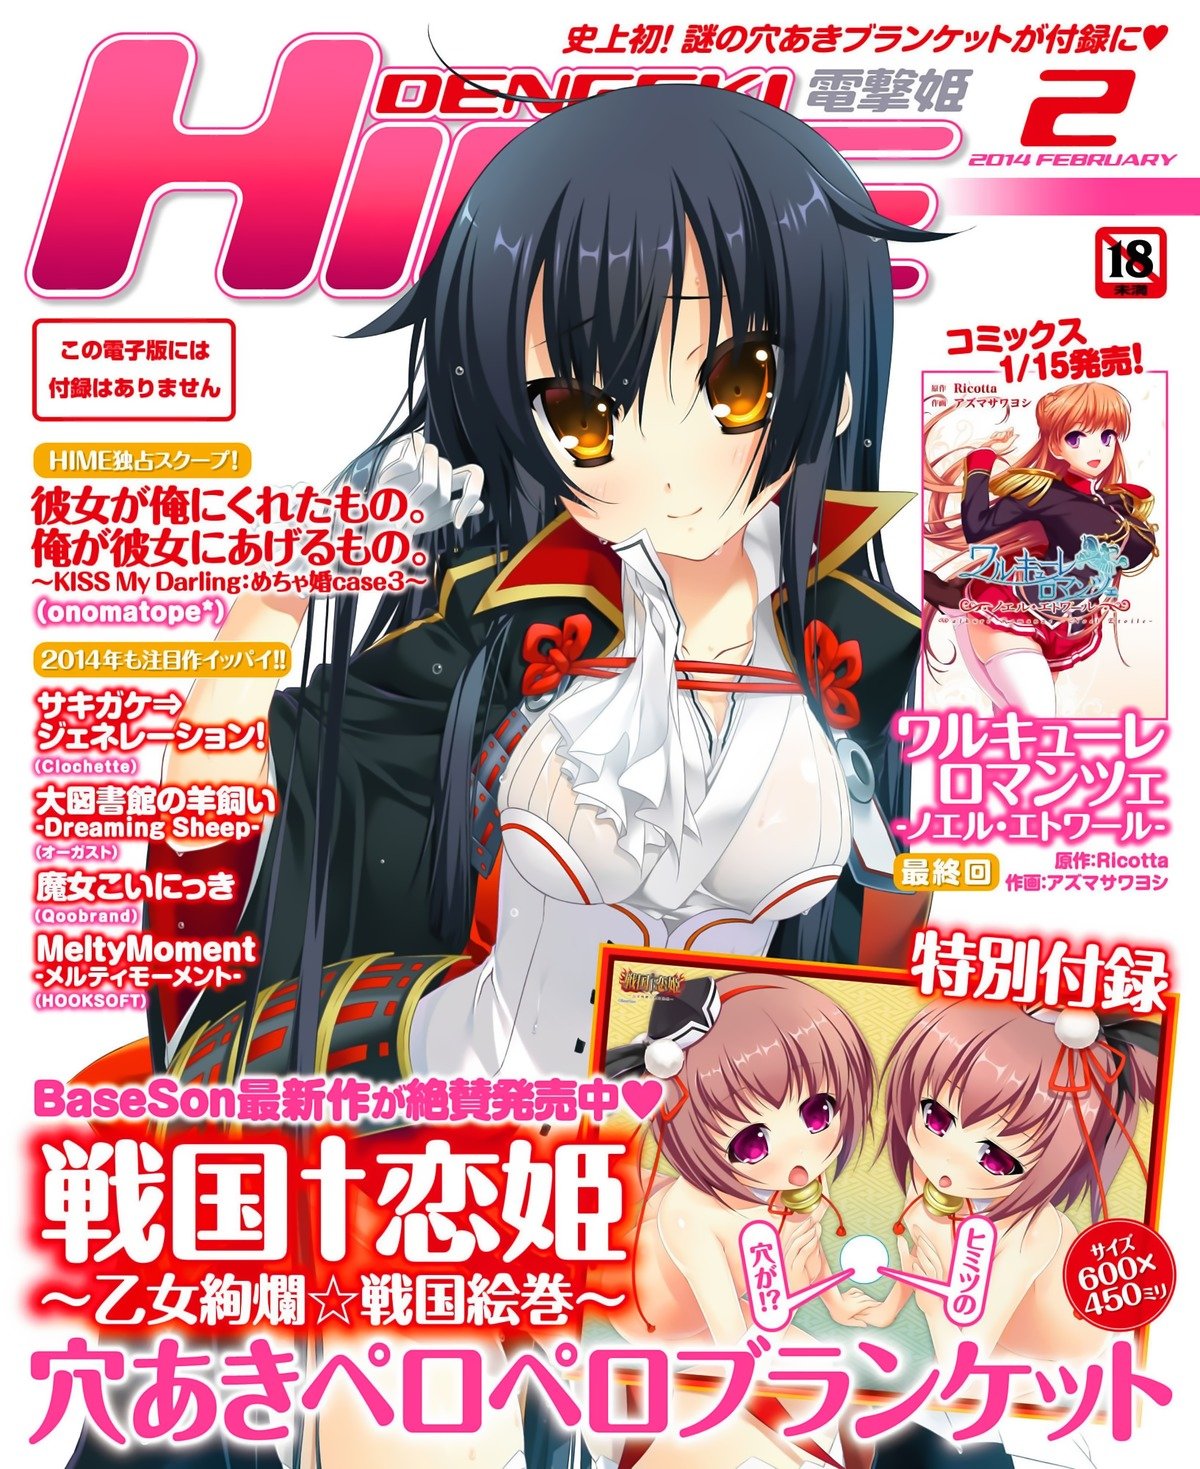 Dengeki Hime Issue 167 Dengeki Hime Retromags Community